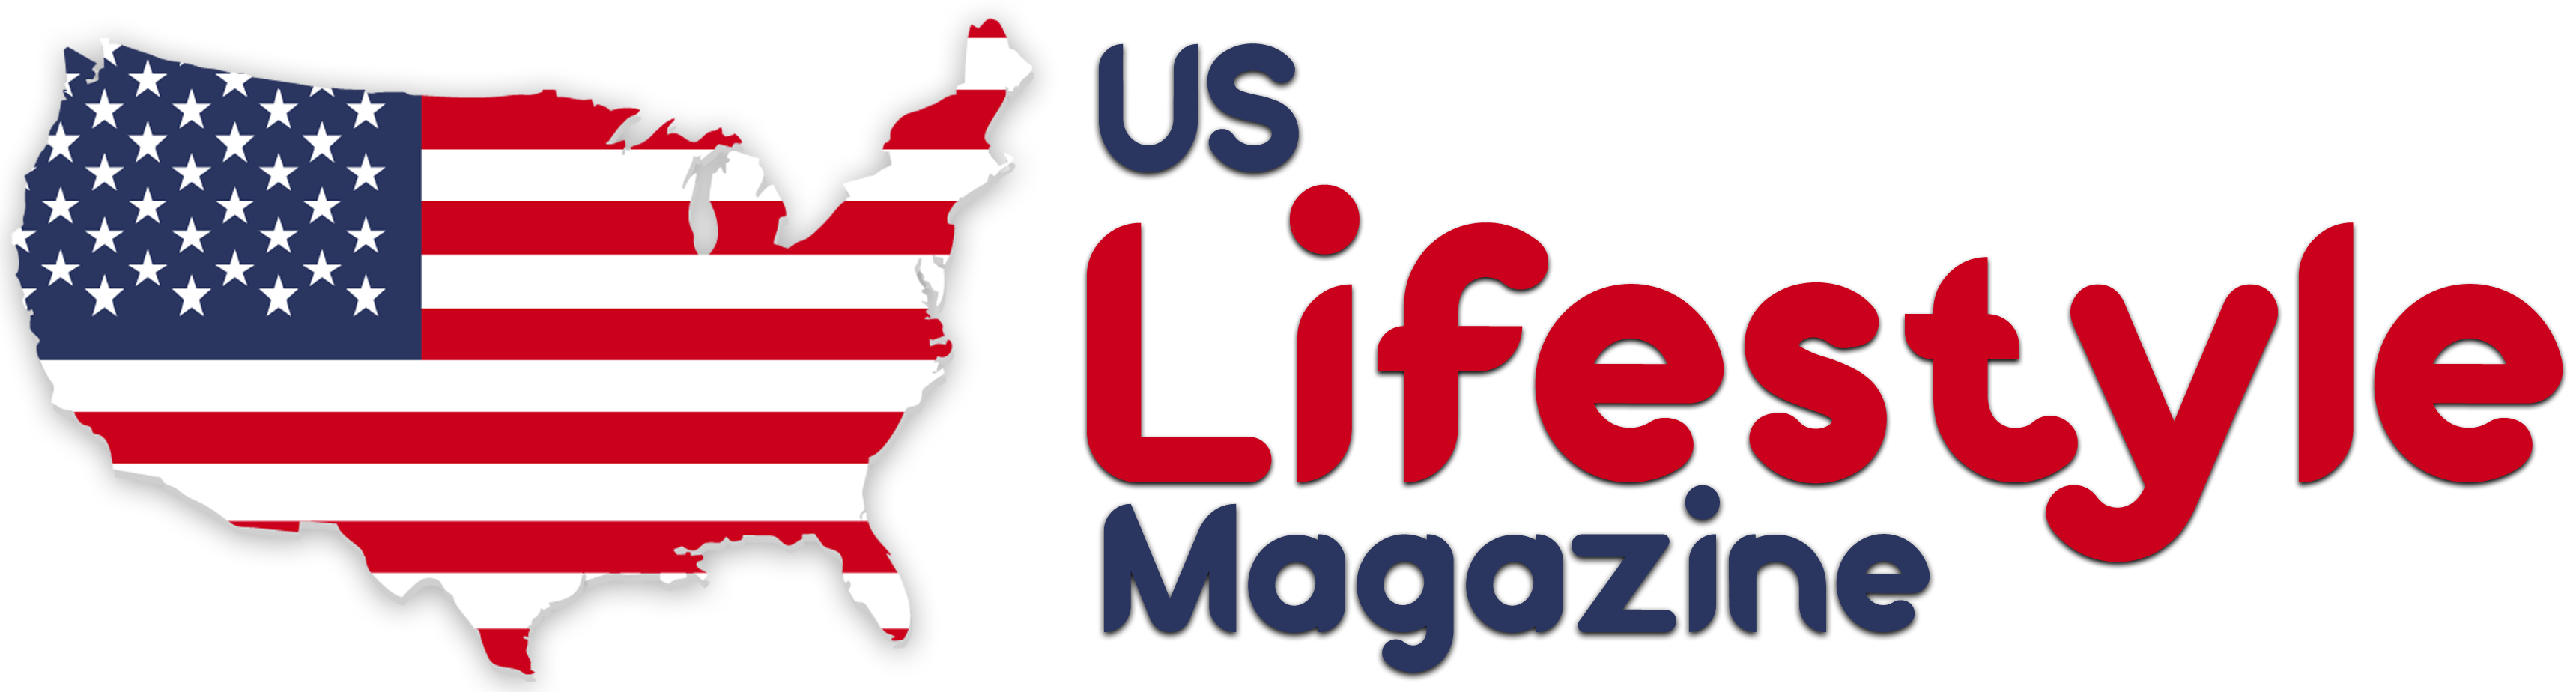 US Lifestyle Mag